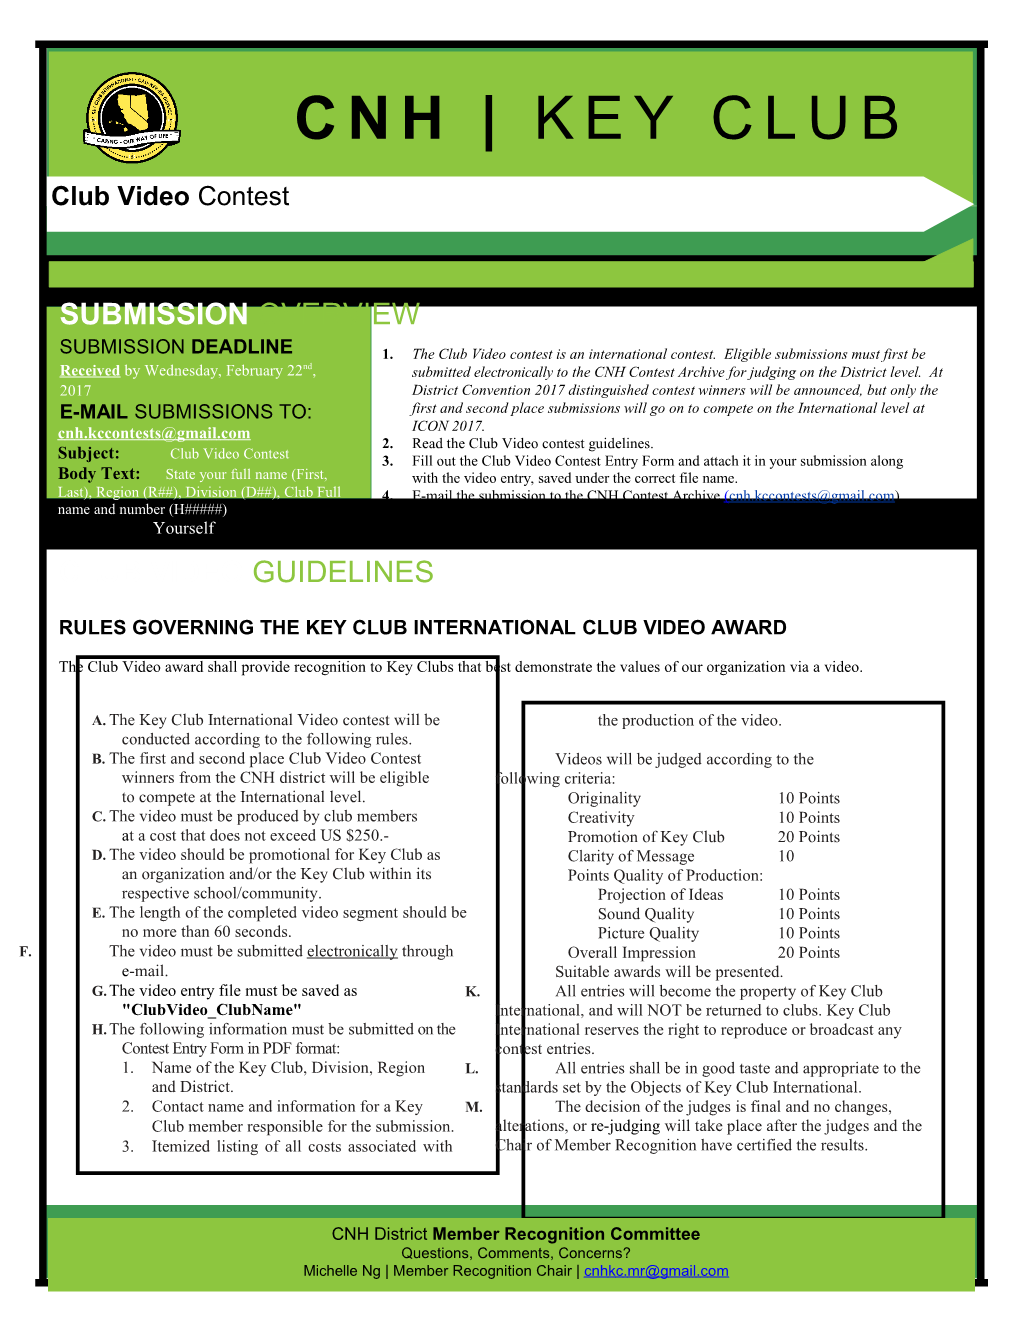 Subject: Club Videocontest